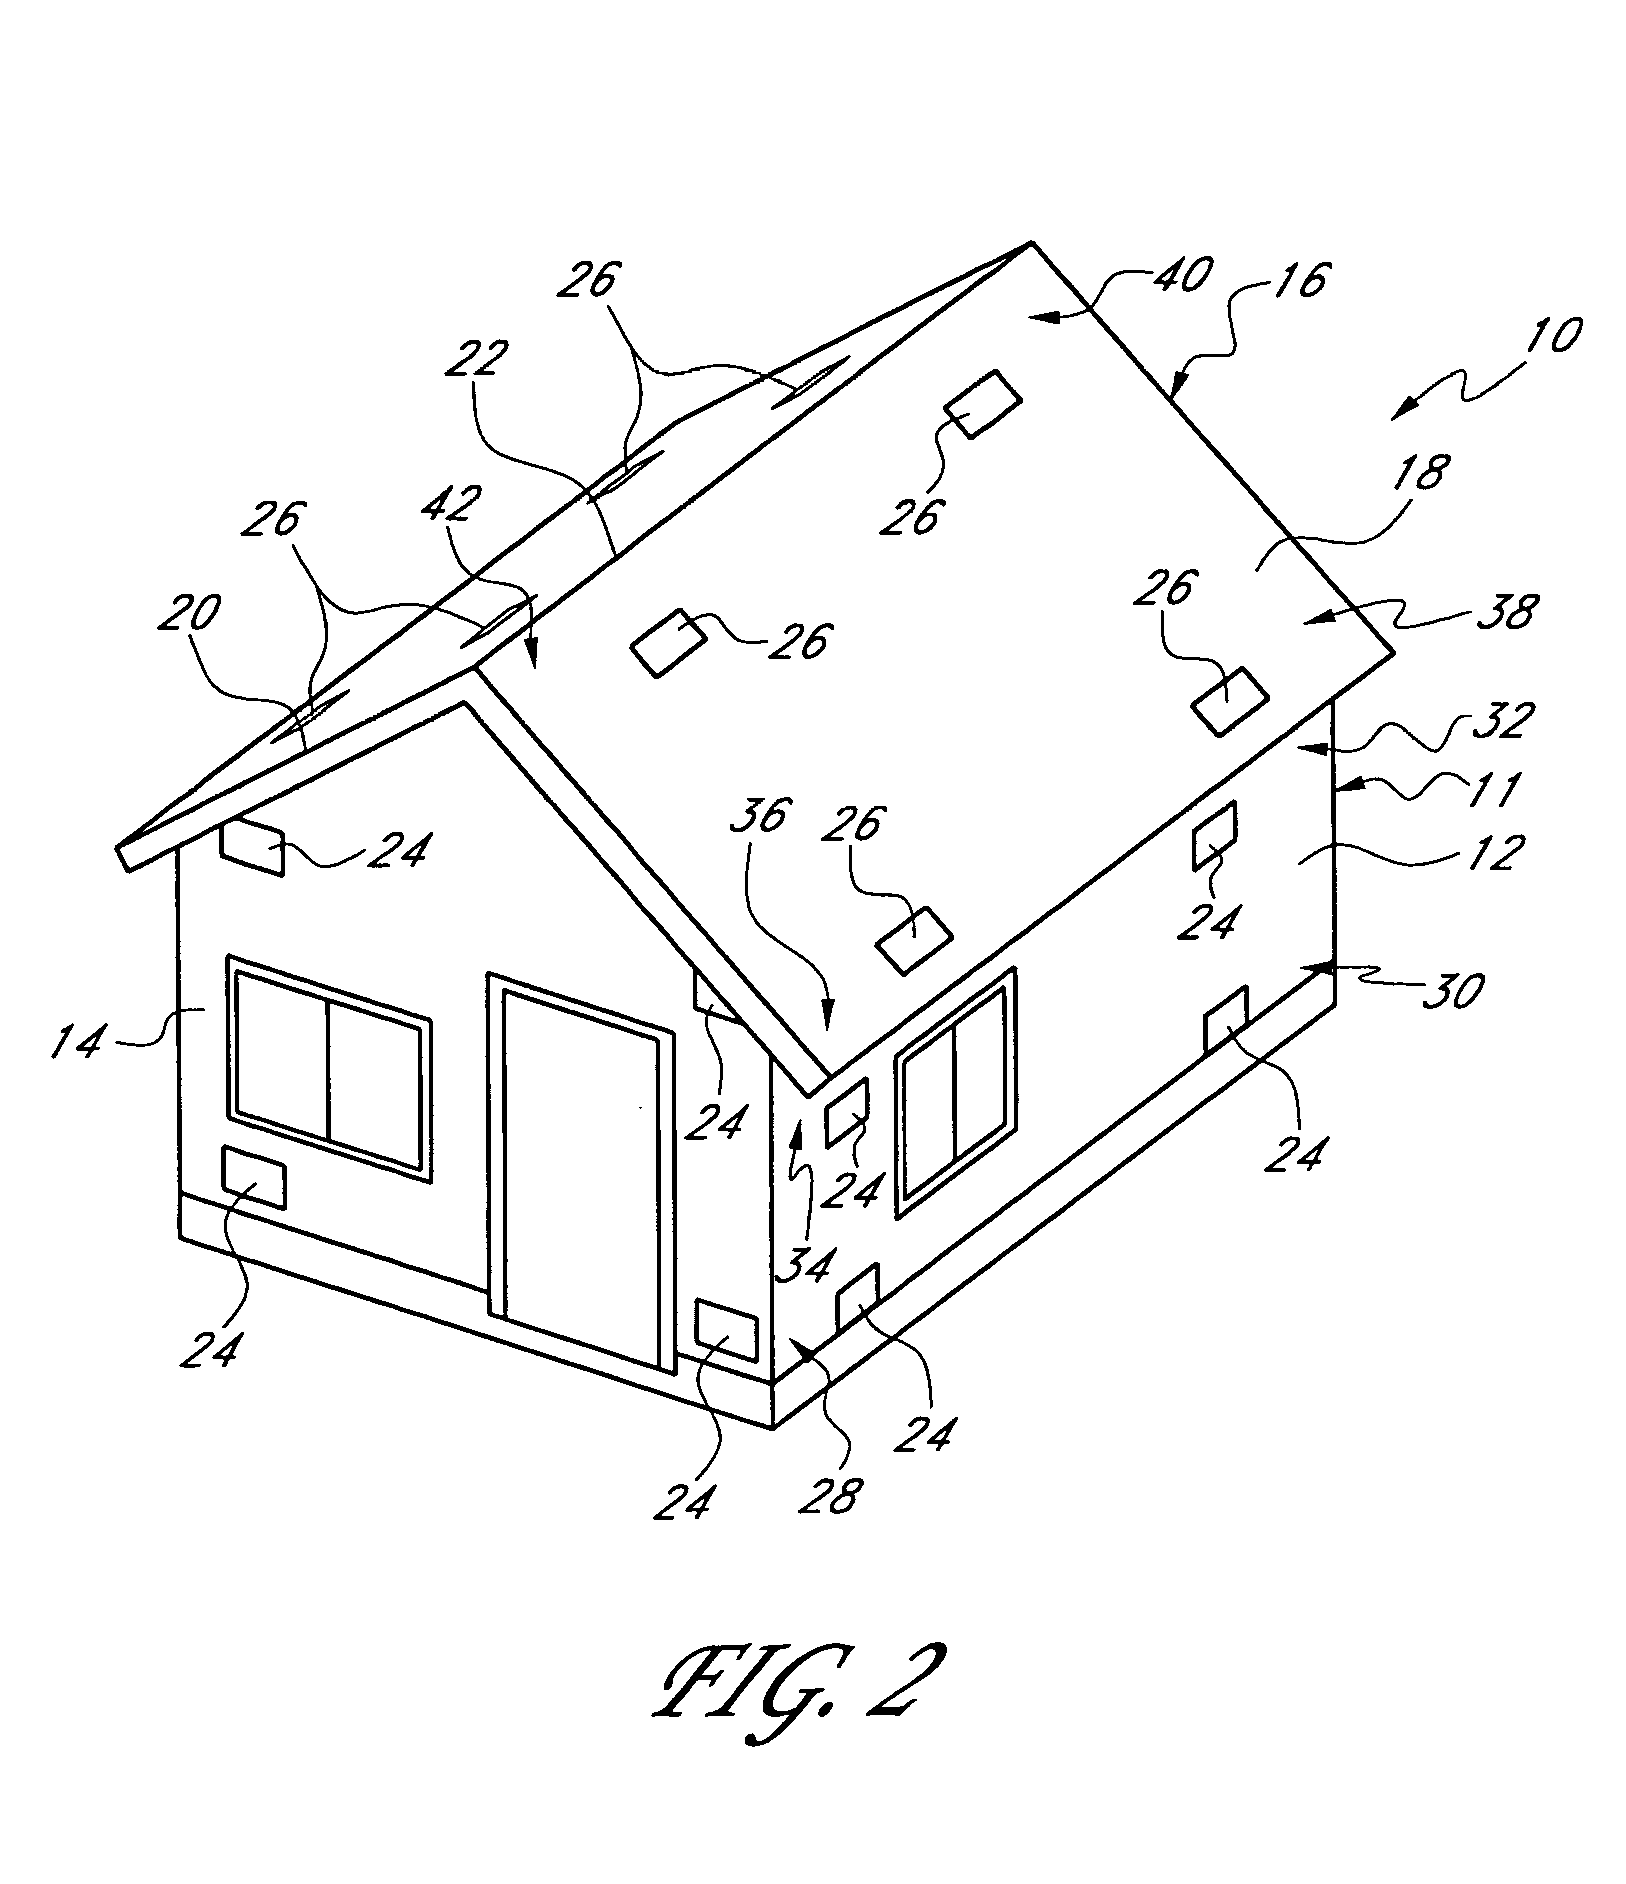 Building with improved vent arrangement